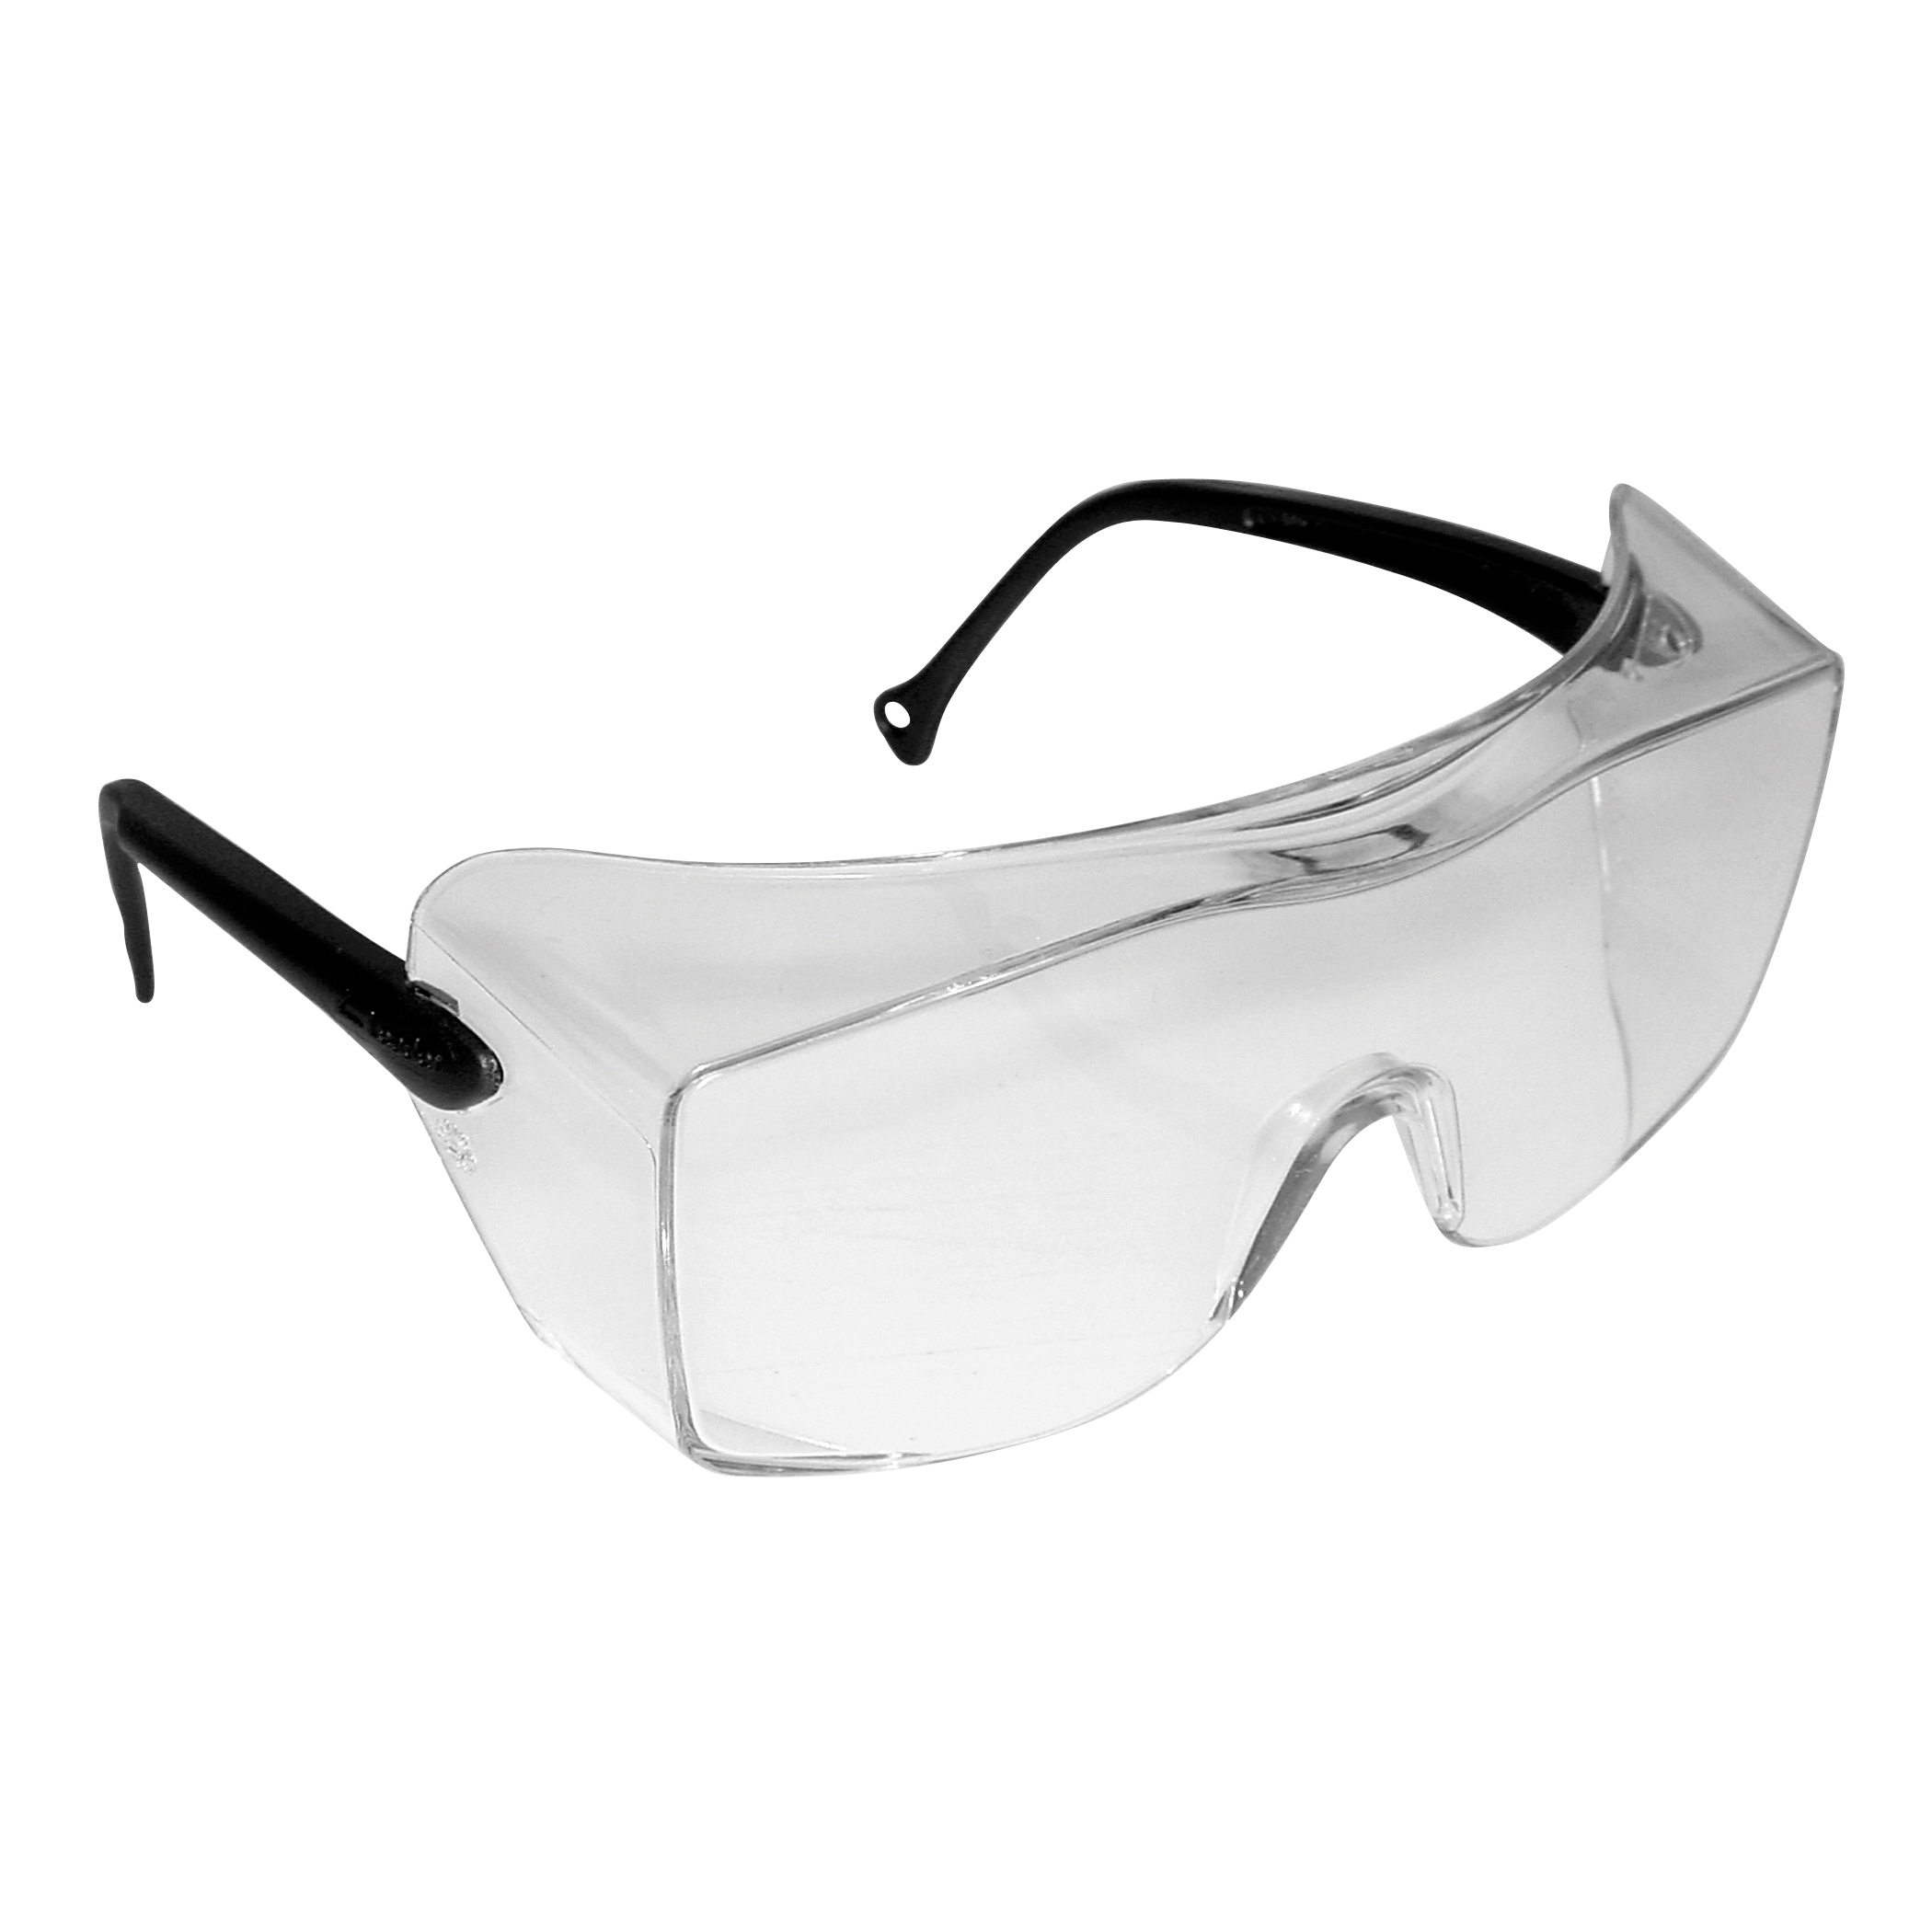 3M™ Virtua™ 078371-62036 V4 Economy Protective Eyewear, Anti-Fog, Clear Lens, Frameless/Wrap Around Frame, Black/Gray, Polycarbonate Frame, Polycarbonate Lens, ANSI Z87.1-2015